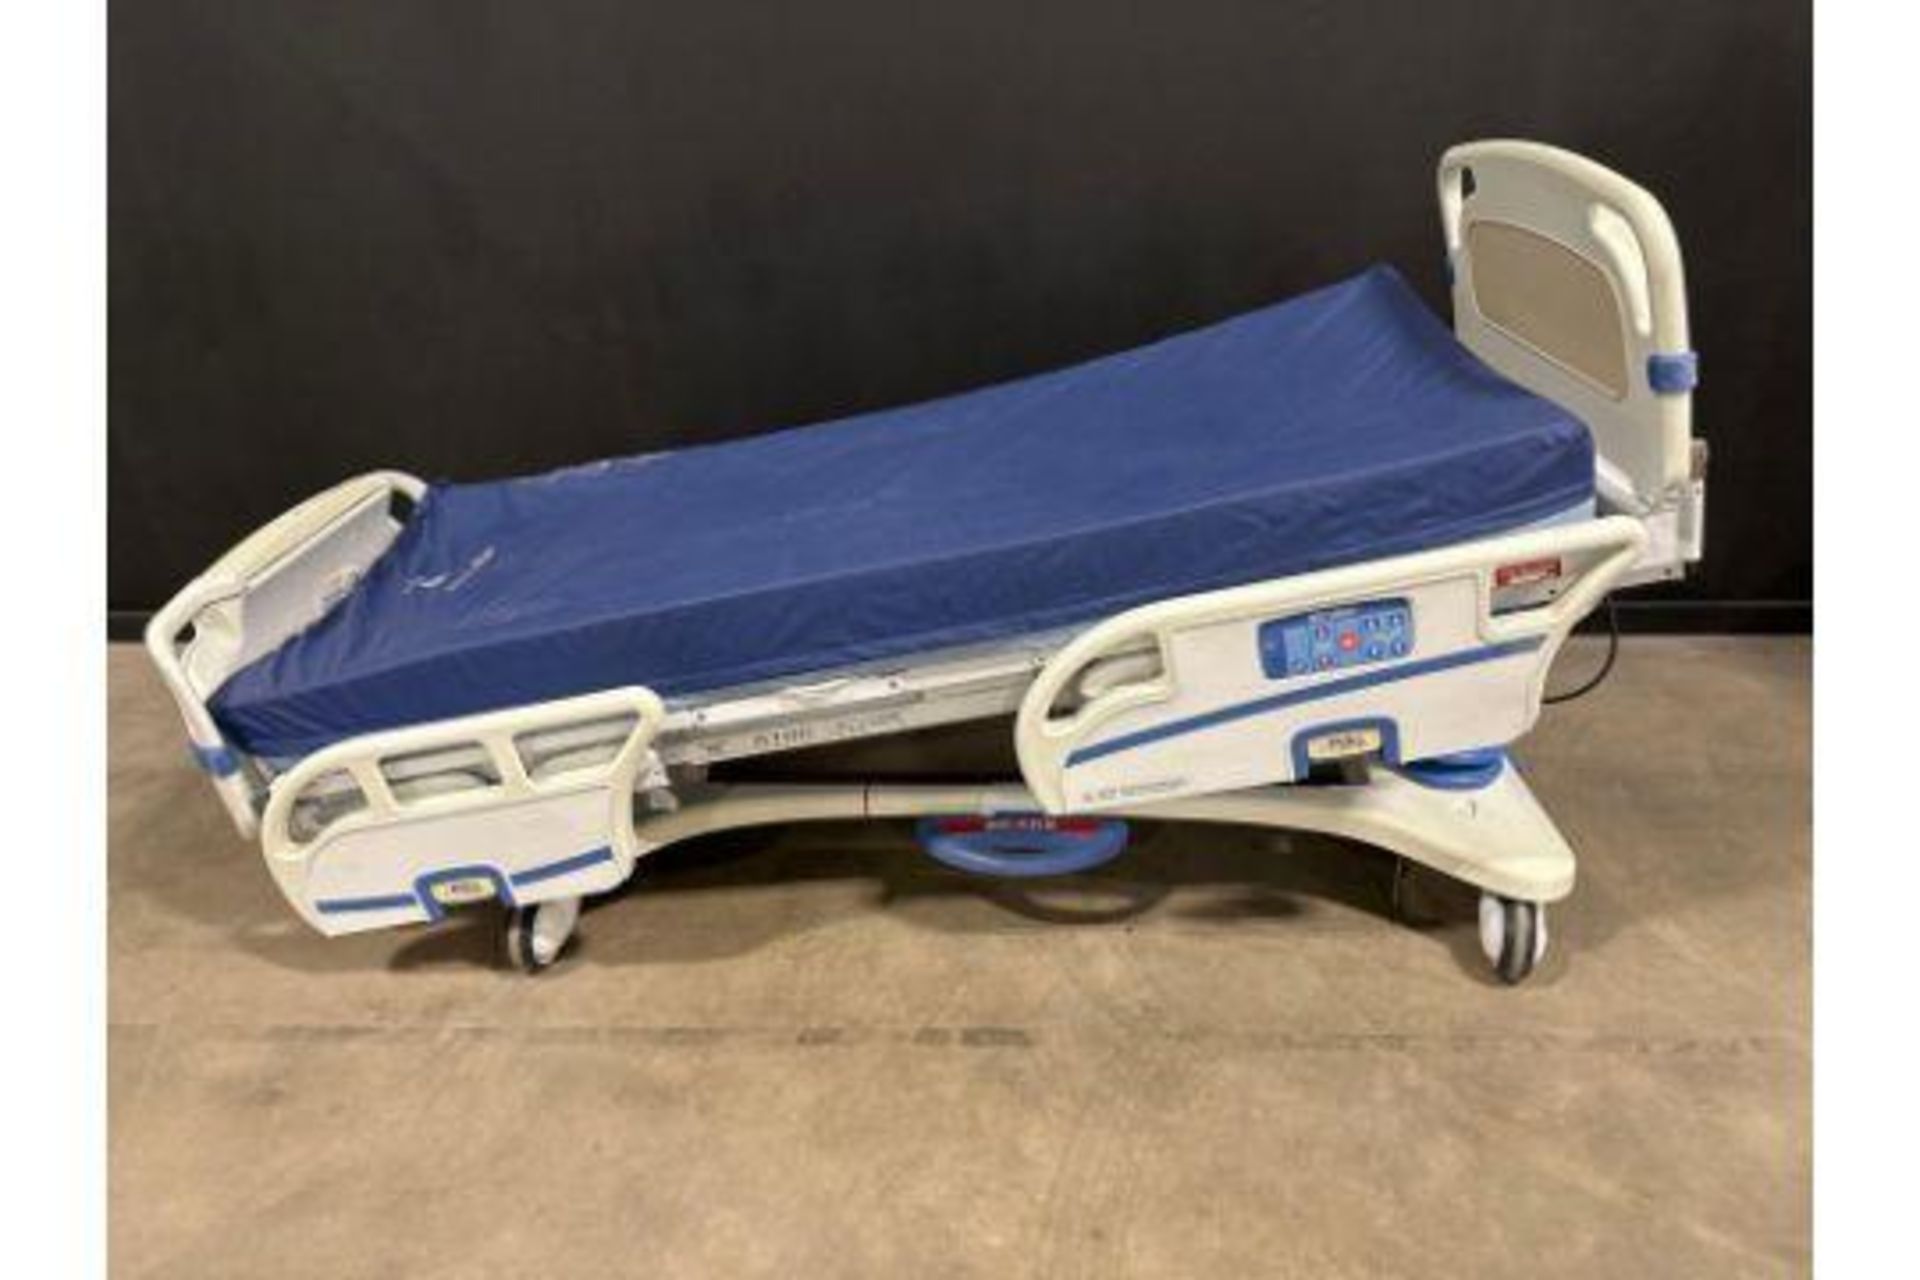 STRYKER 3002 S3 HOSPITAL BED